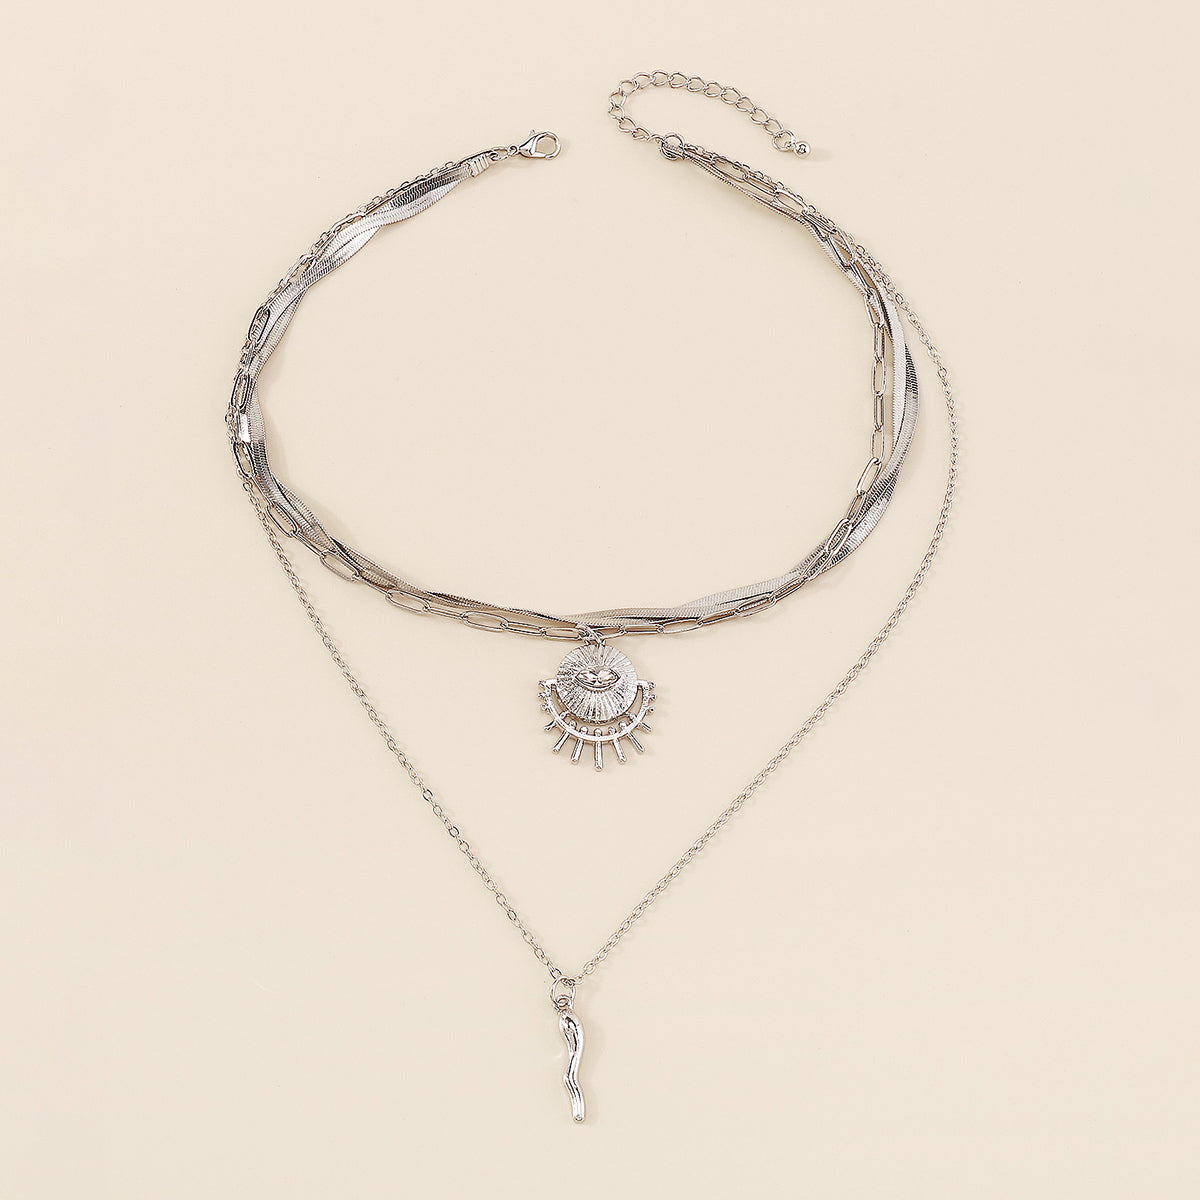 Punk Twist Snake Chain Eye Pendant Necklace medyjewelry